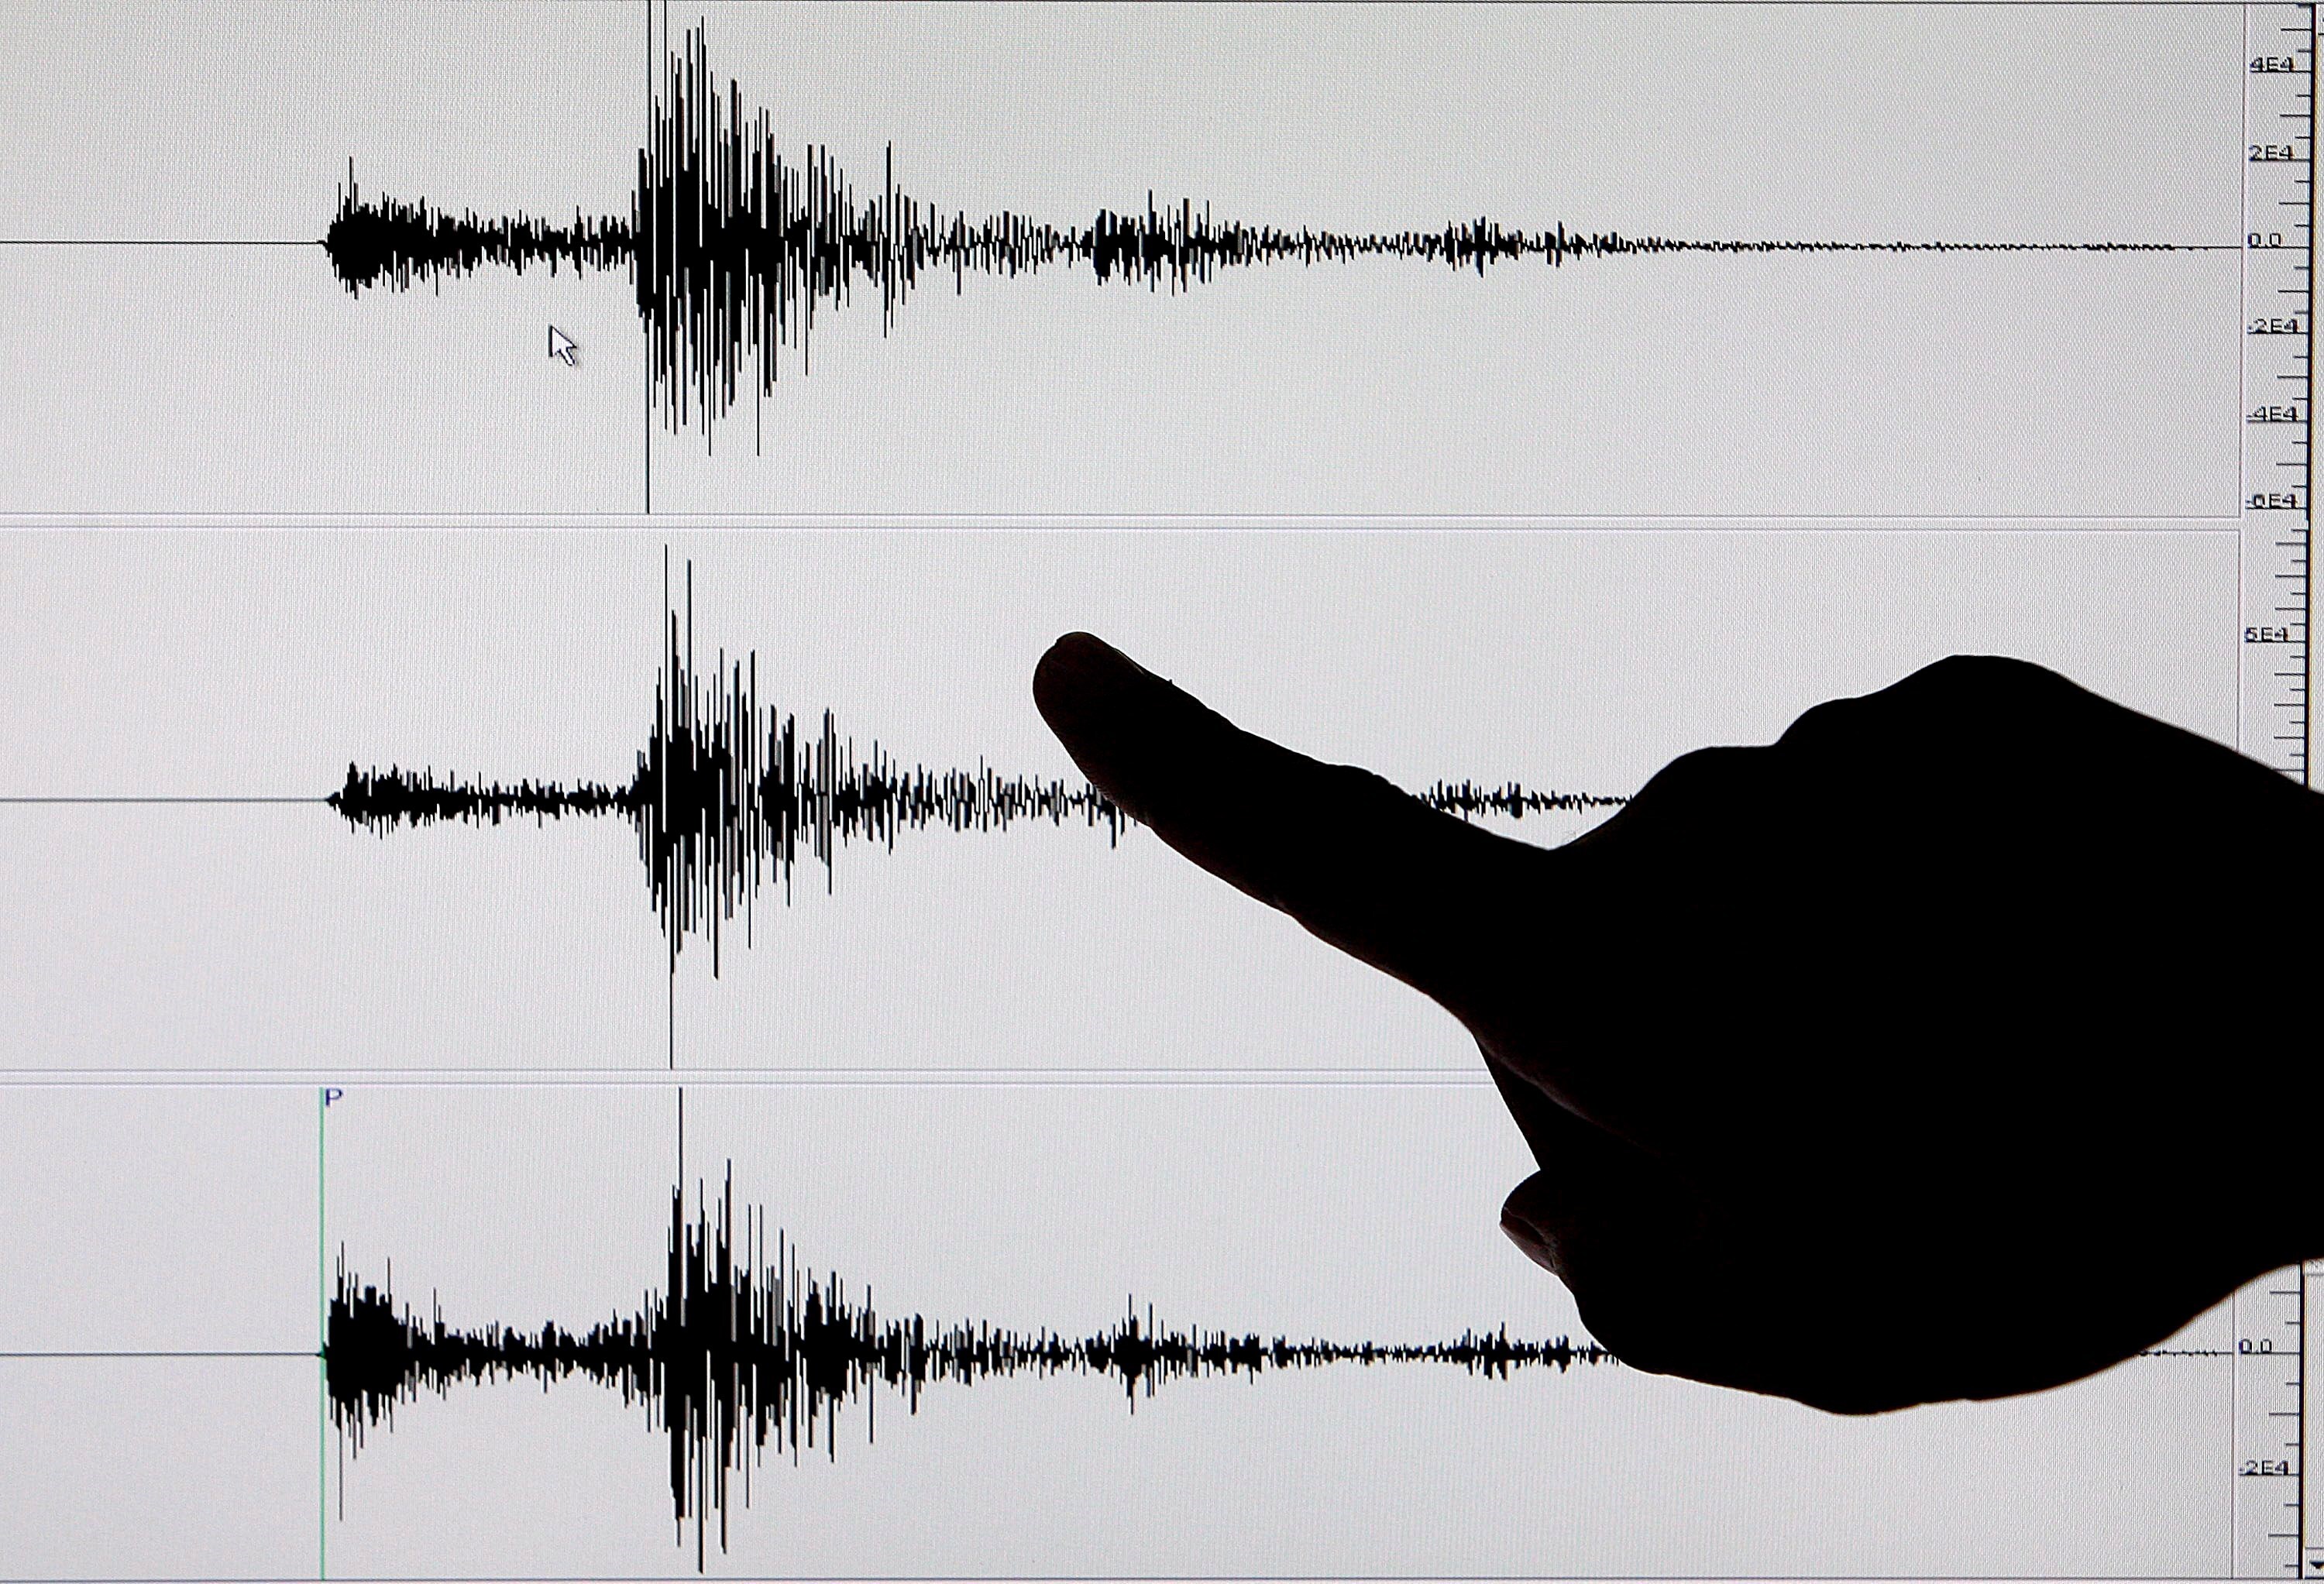 A powerful 7.8 magnitude earthquake struck Turkey